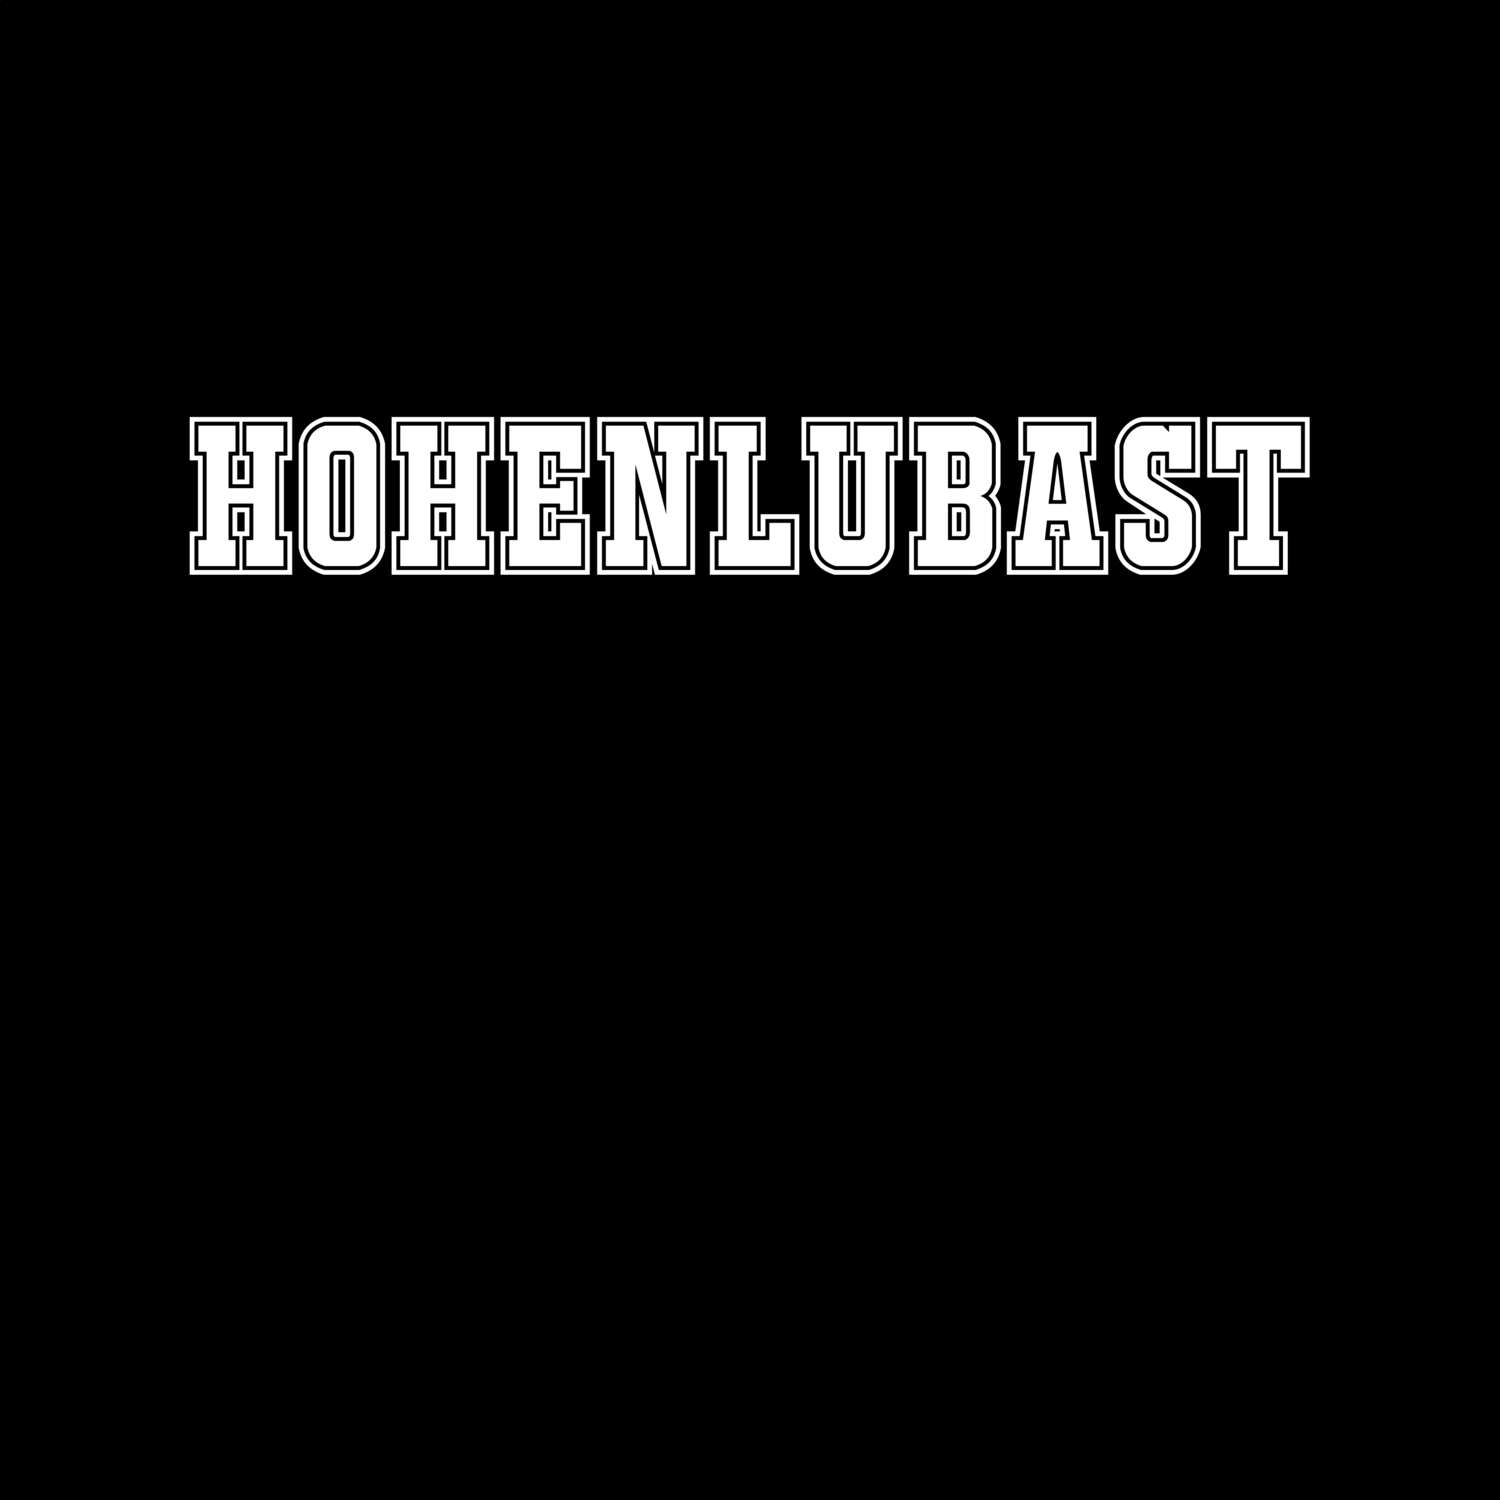 Hohenlubast T-Shirt »Classic«